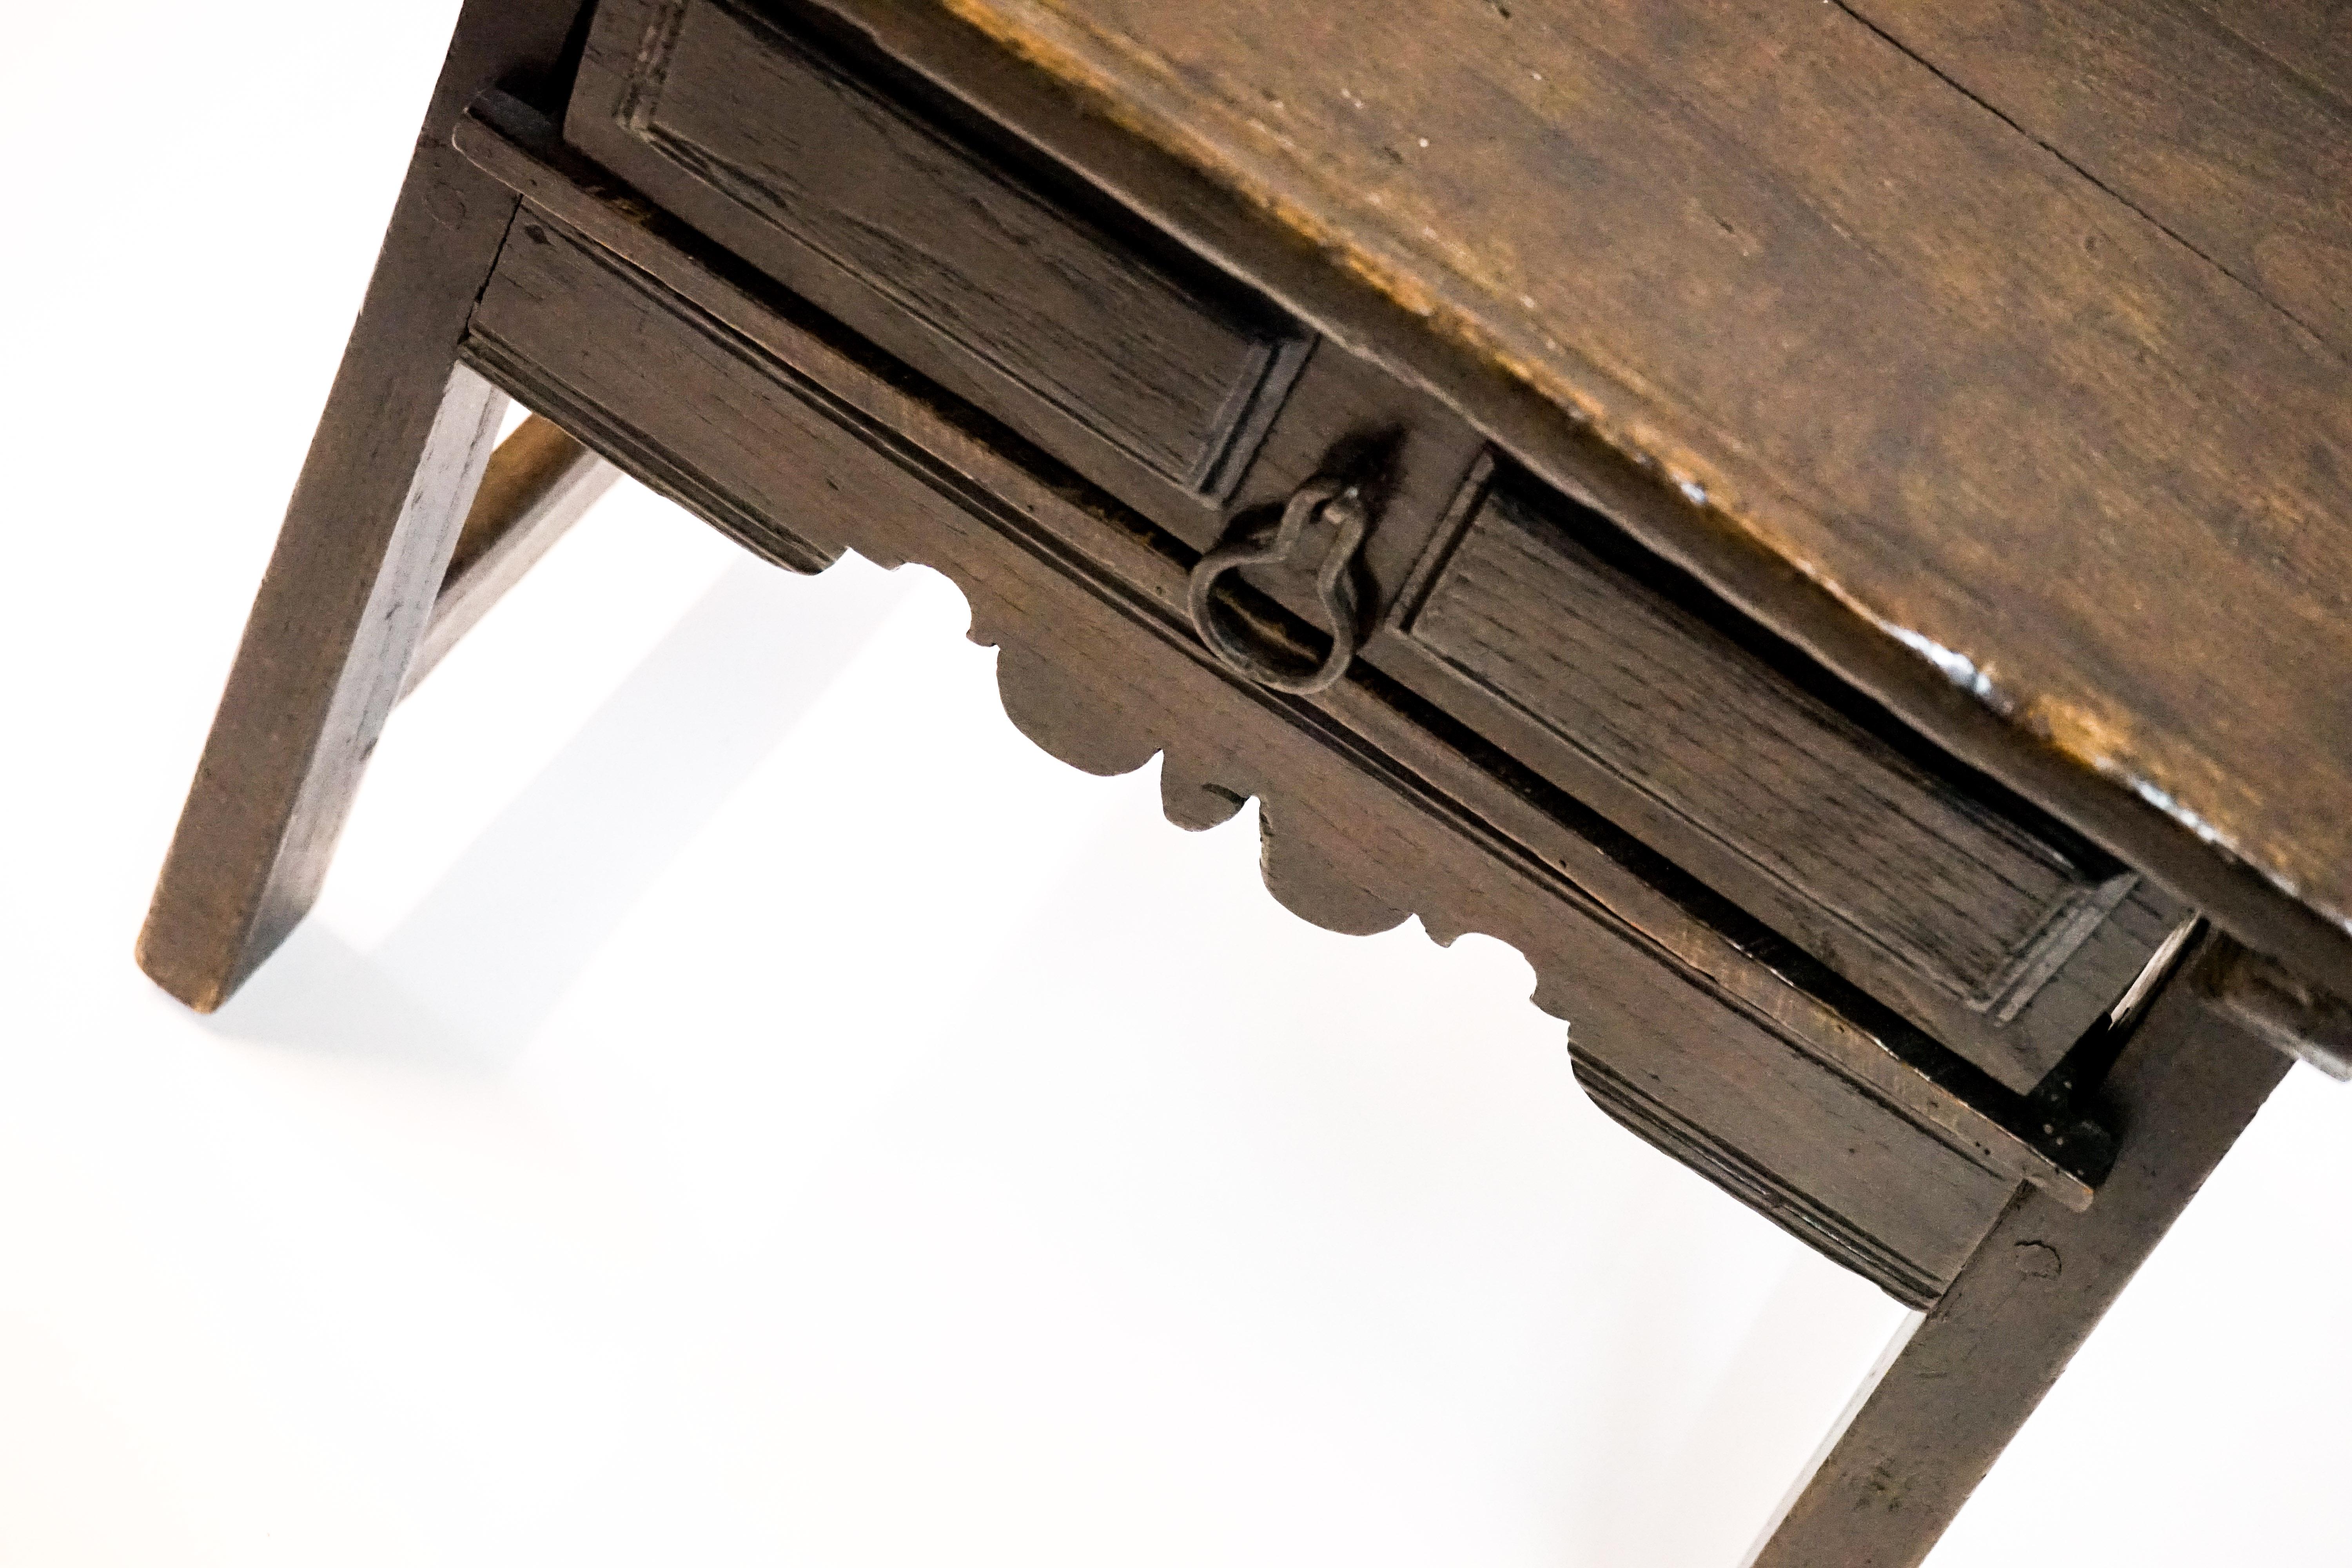 Antique carved Spanish end table

Origin: Spain, circa 19th century

Measurements: 28.25